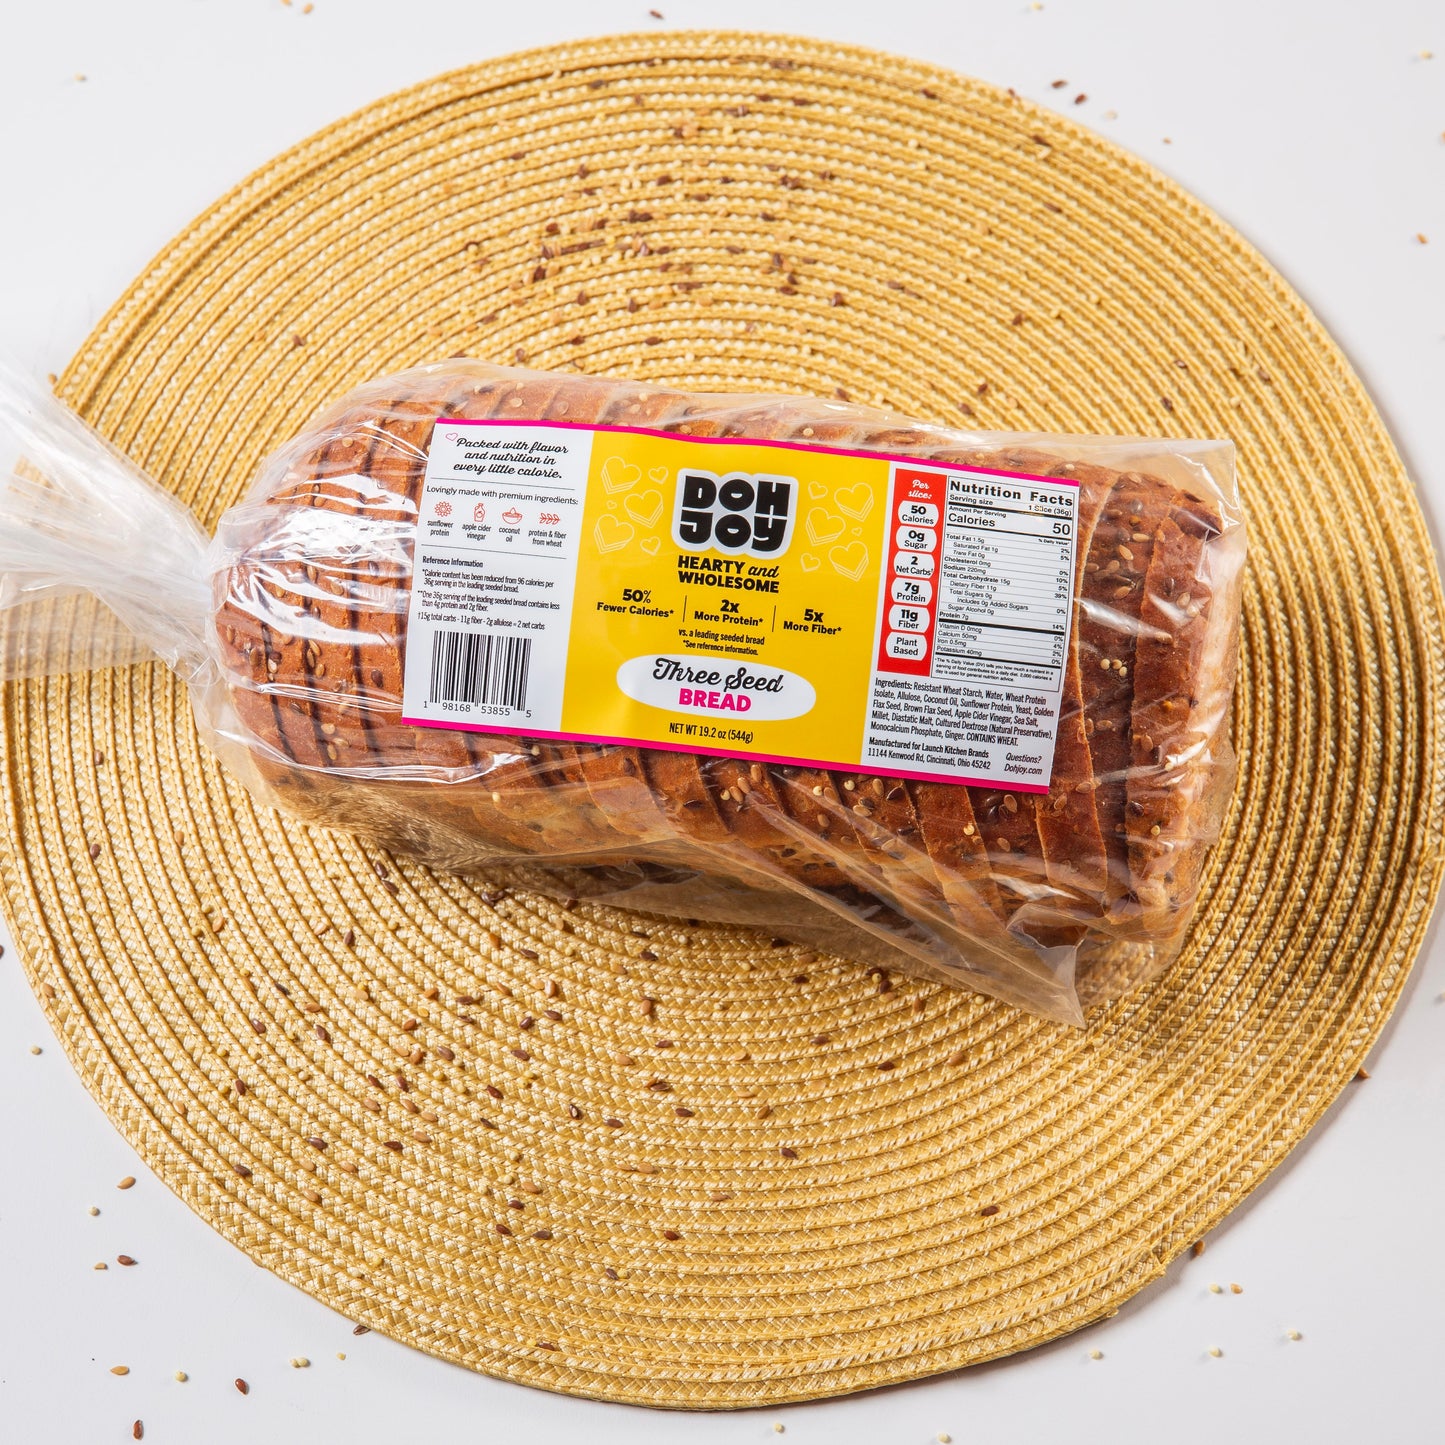 Three Seed Bread (2 Net Carbs)